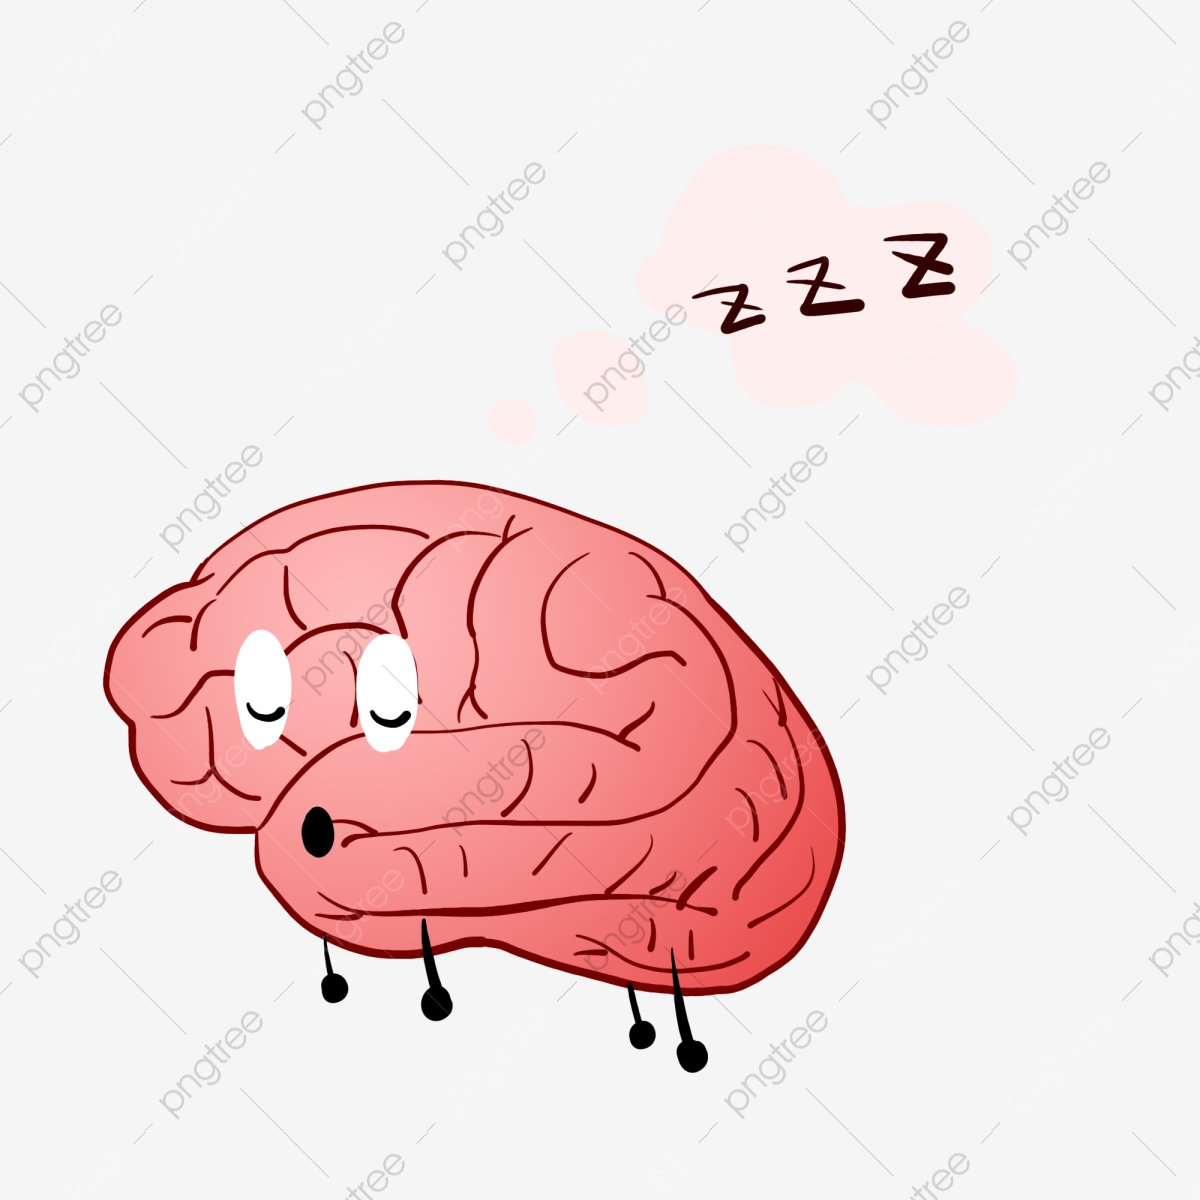 dreaming clipart sleepy brain